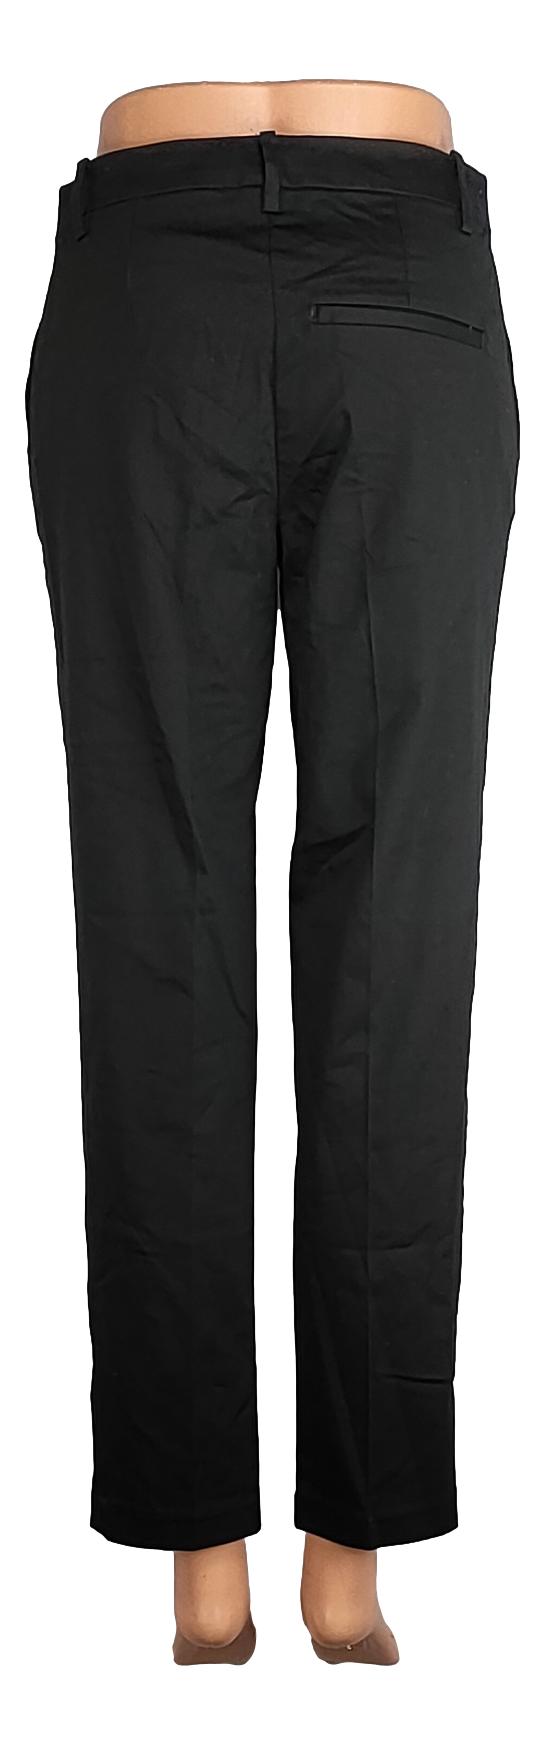 Pantalon H-M Taille 36